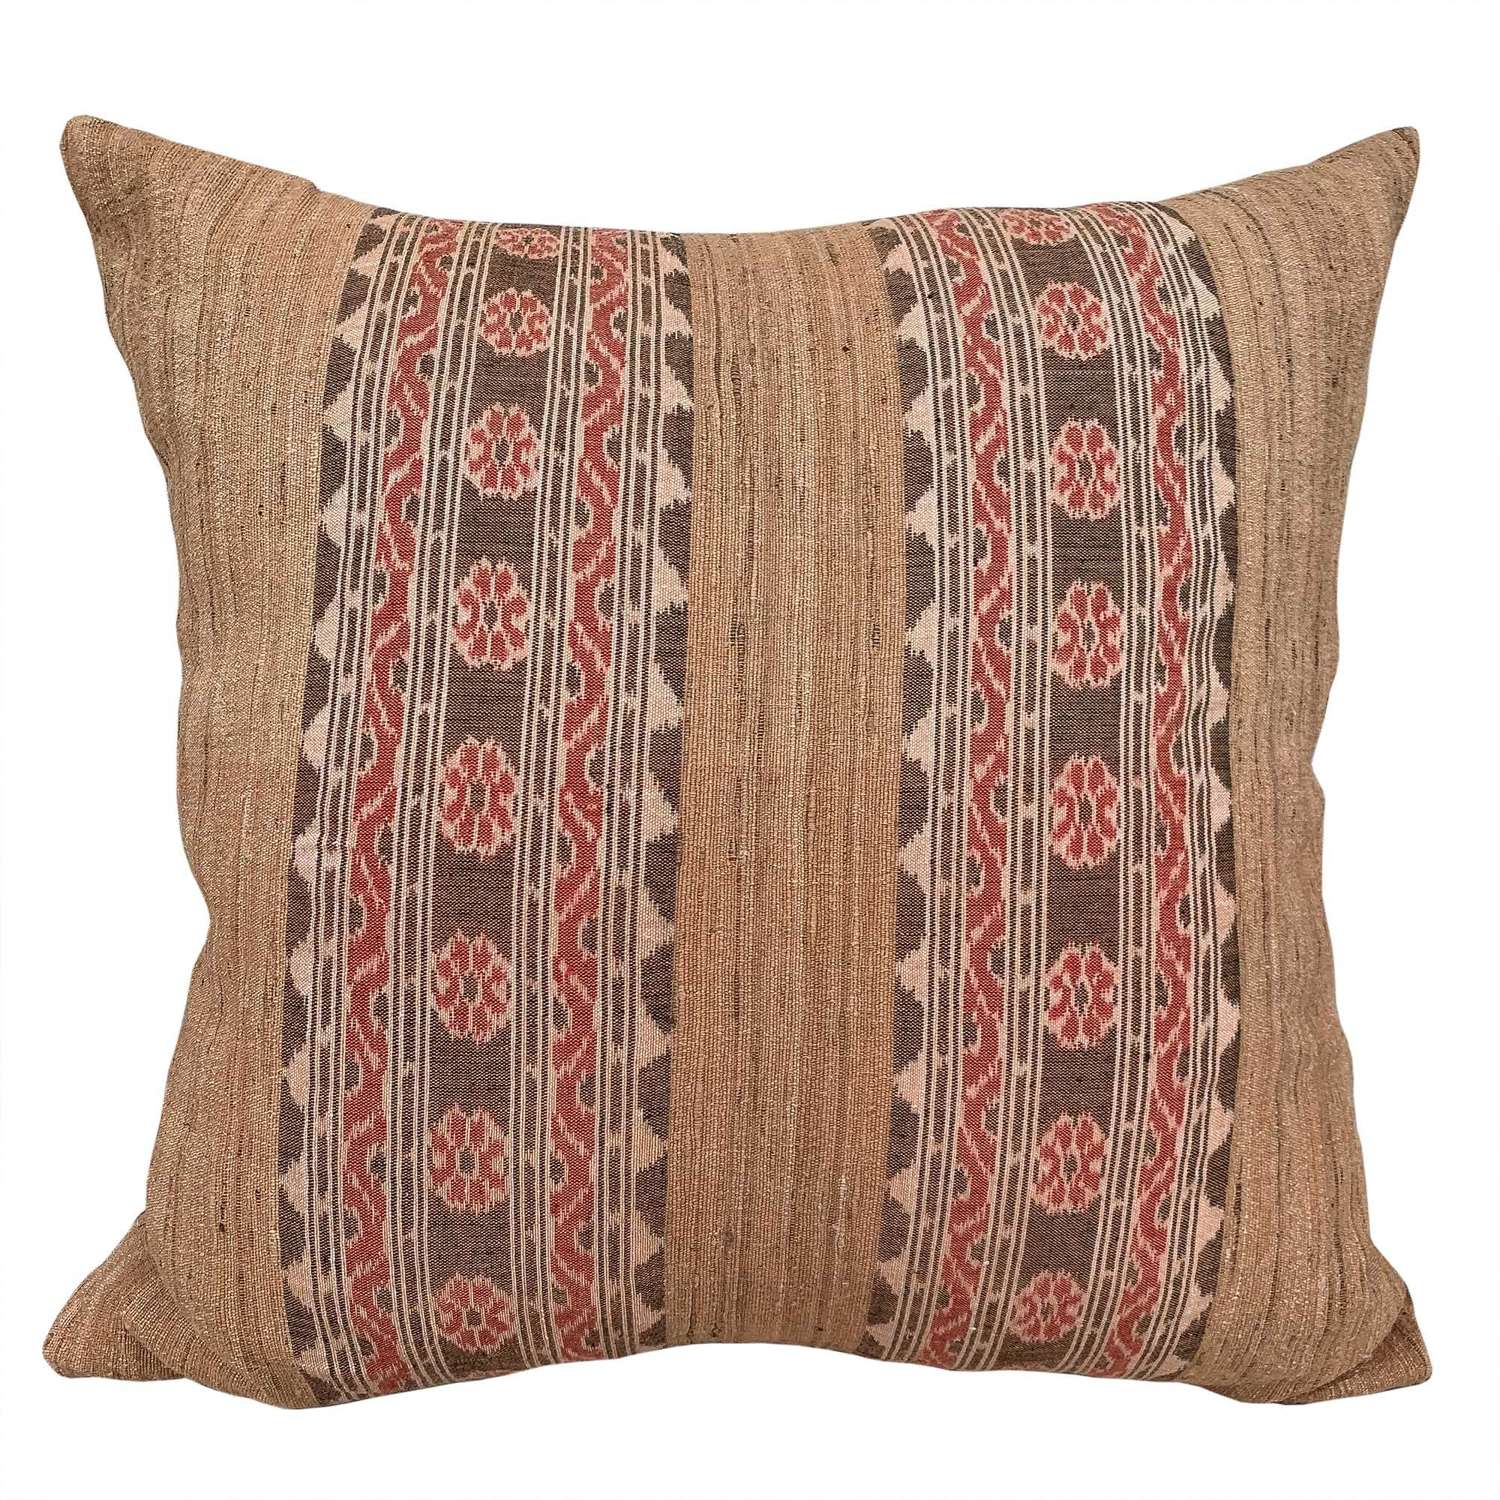 Orissa silk cushions